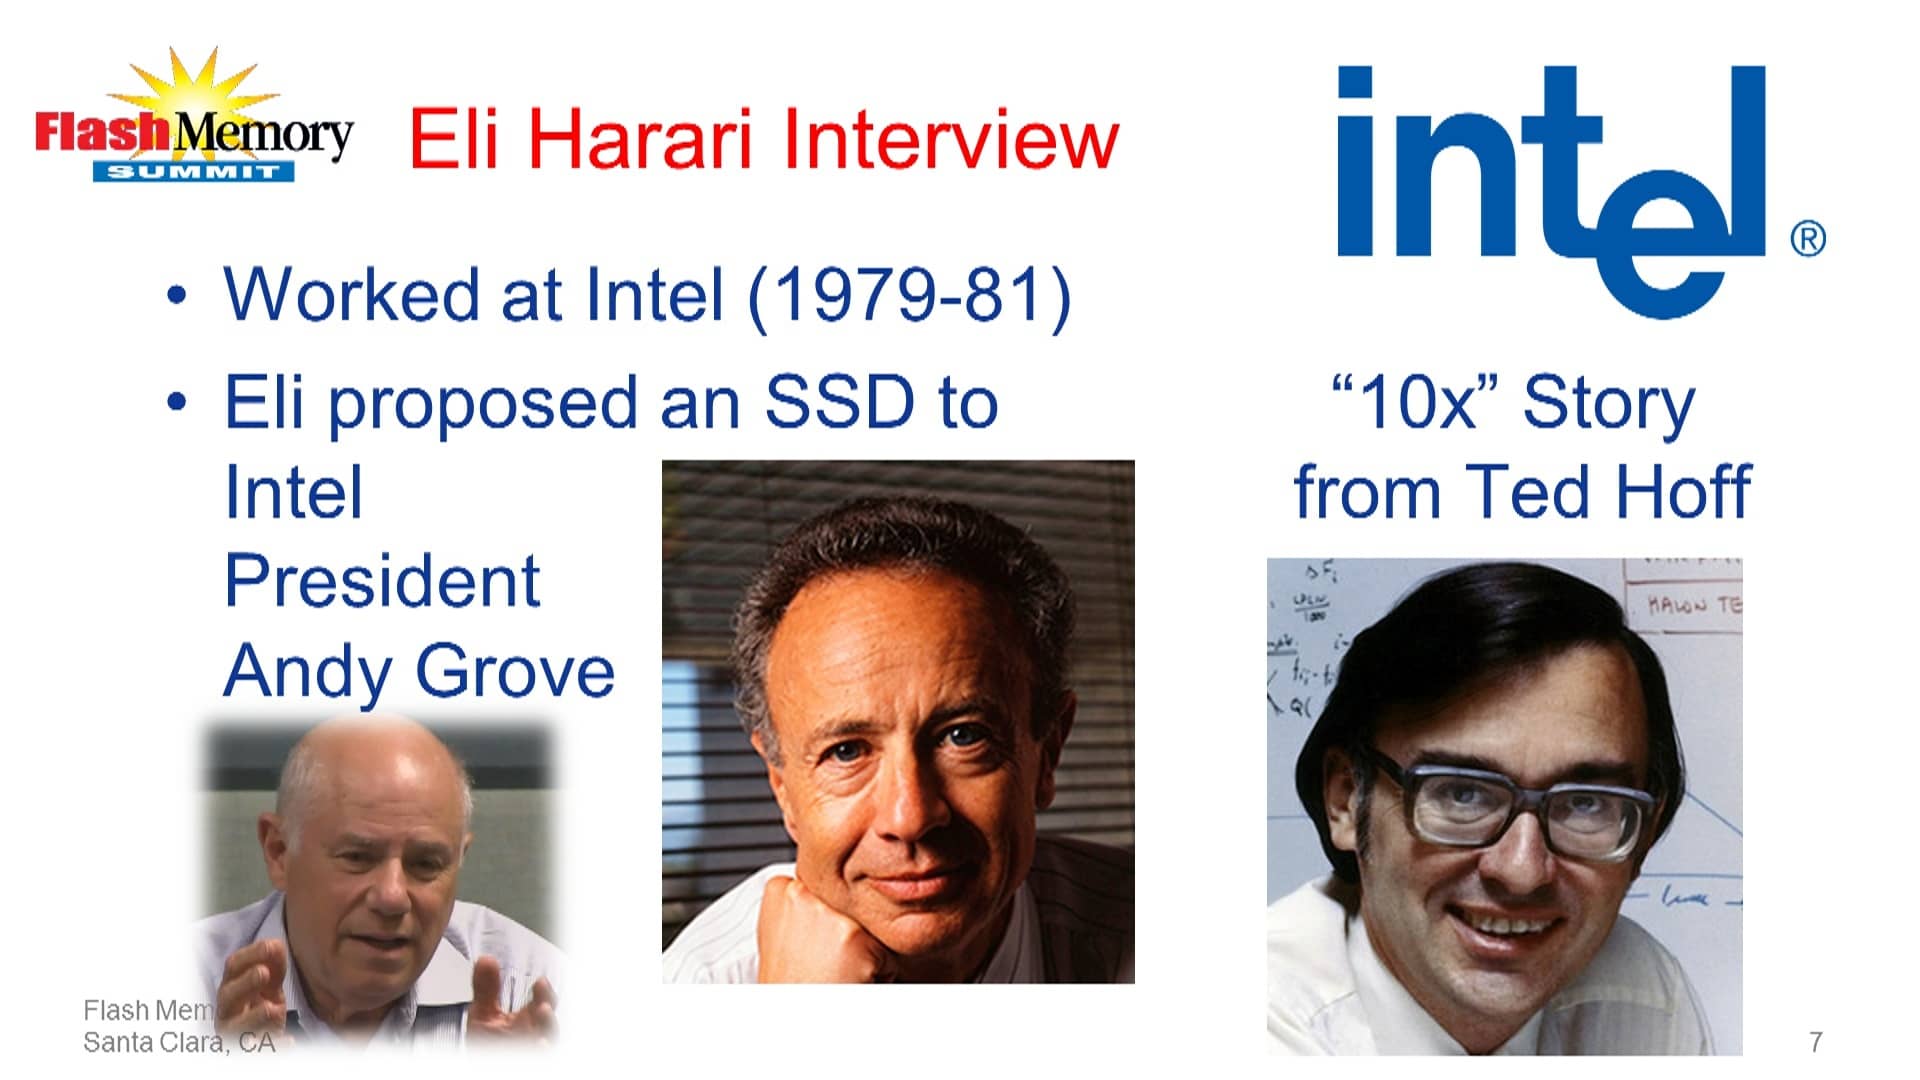 Eli Harari’s Time at Intel